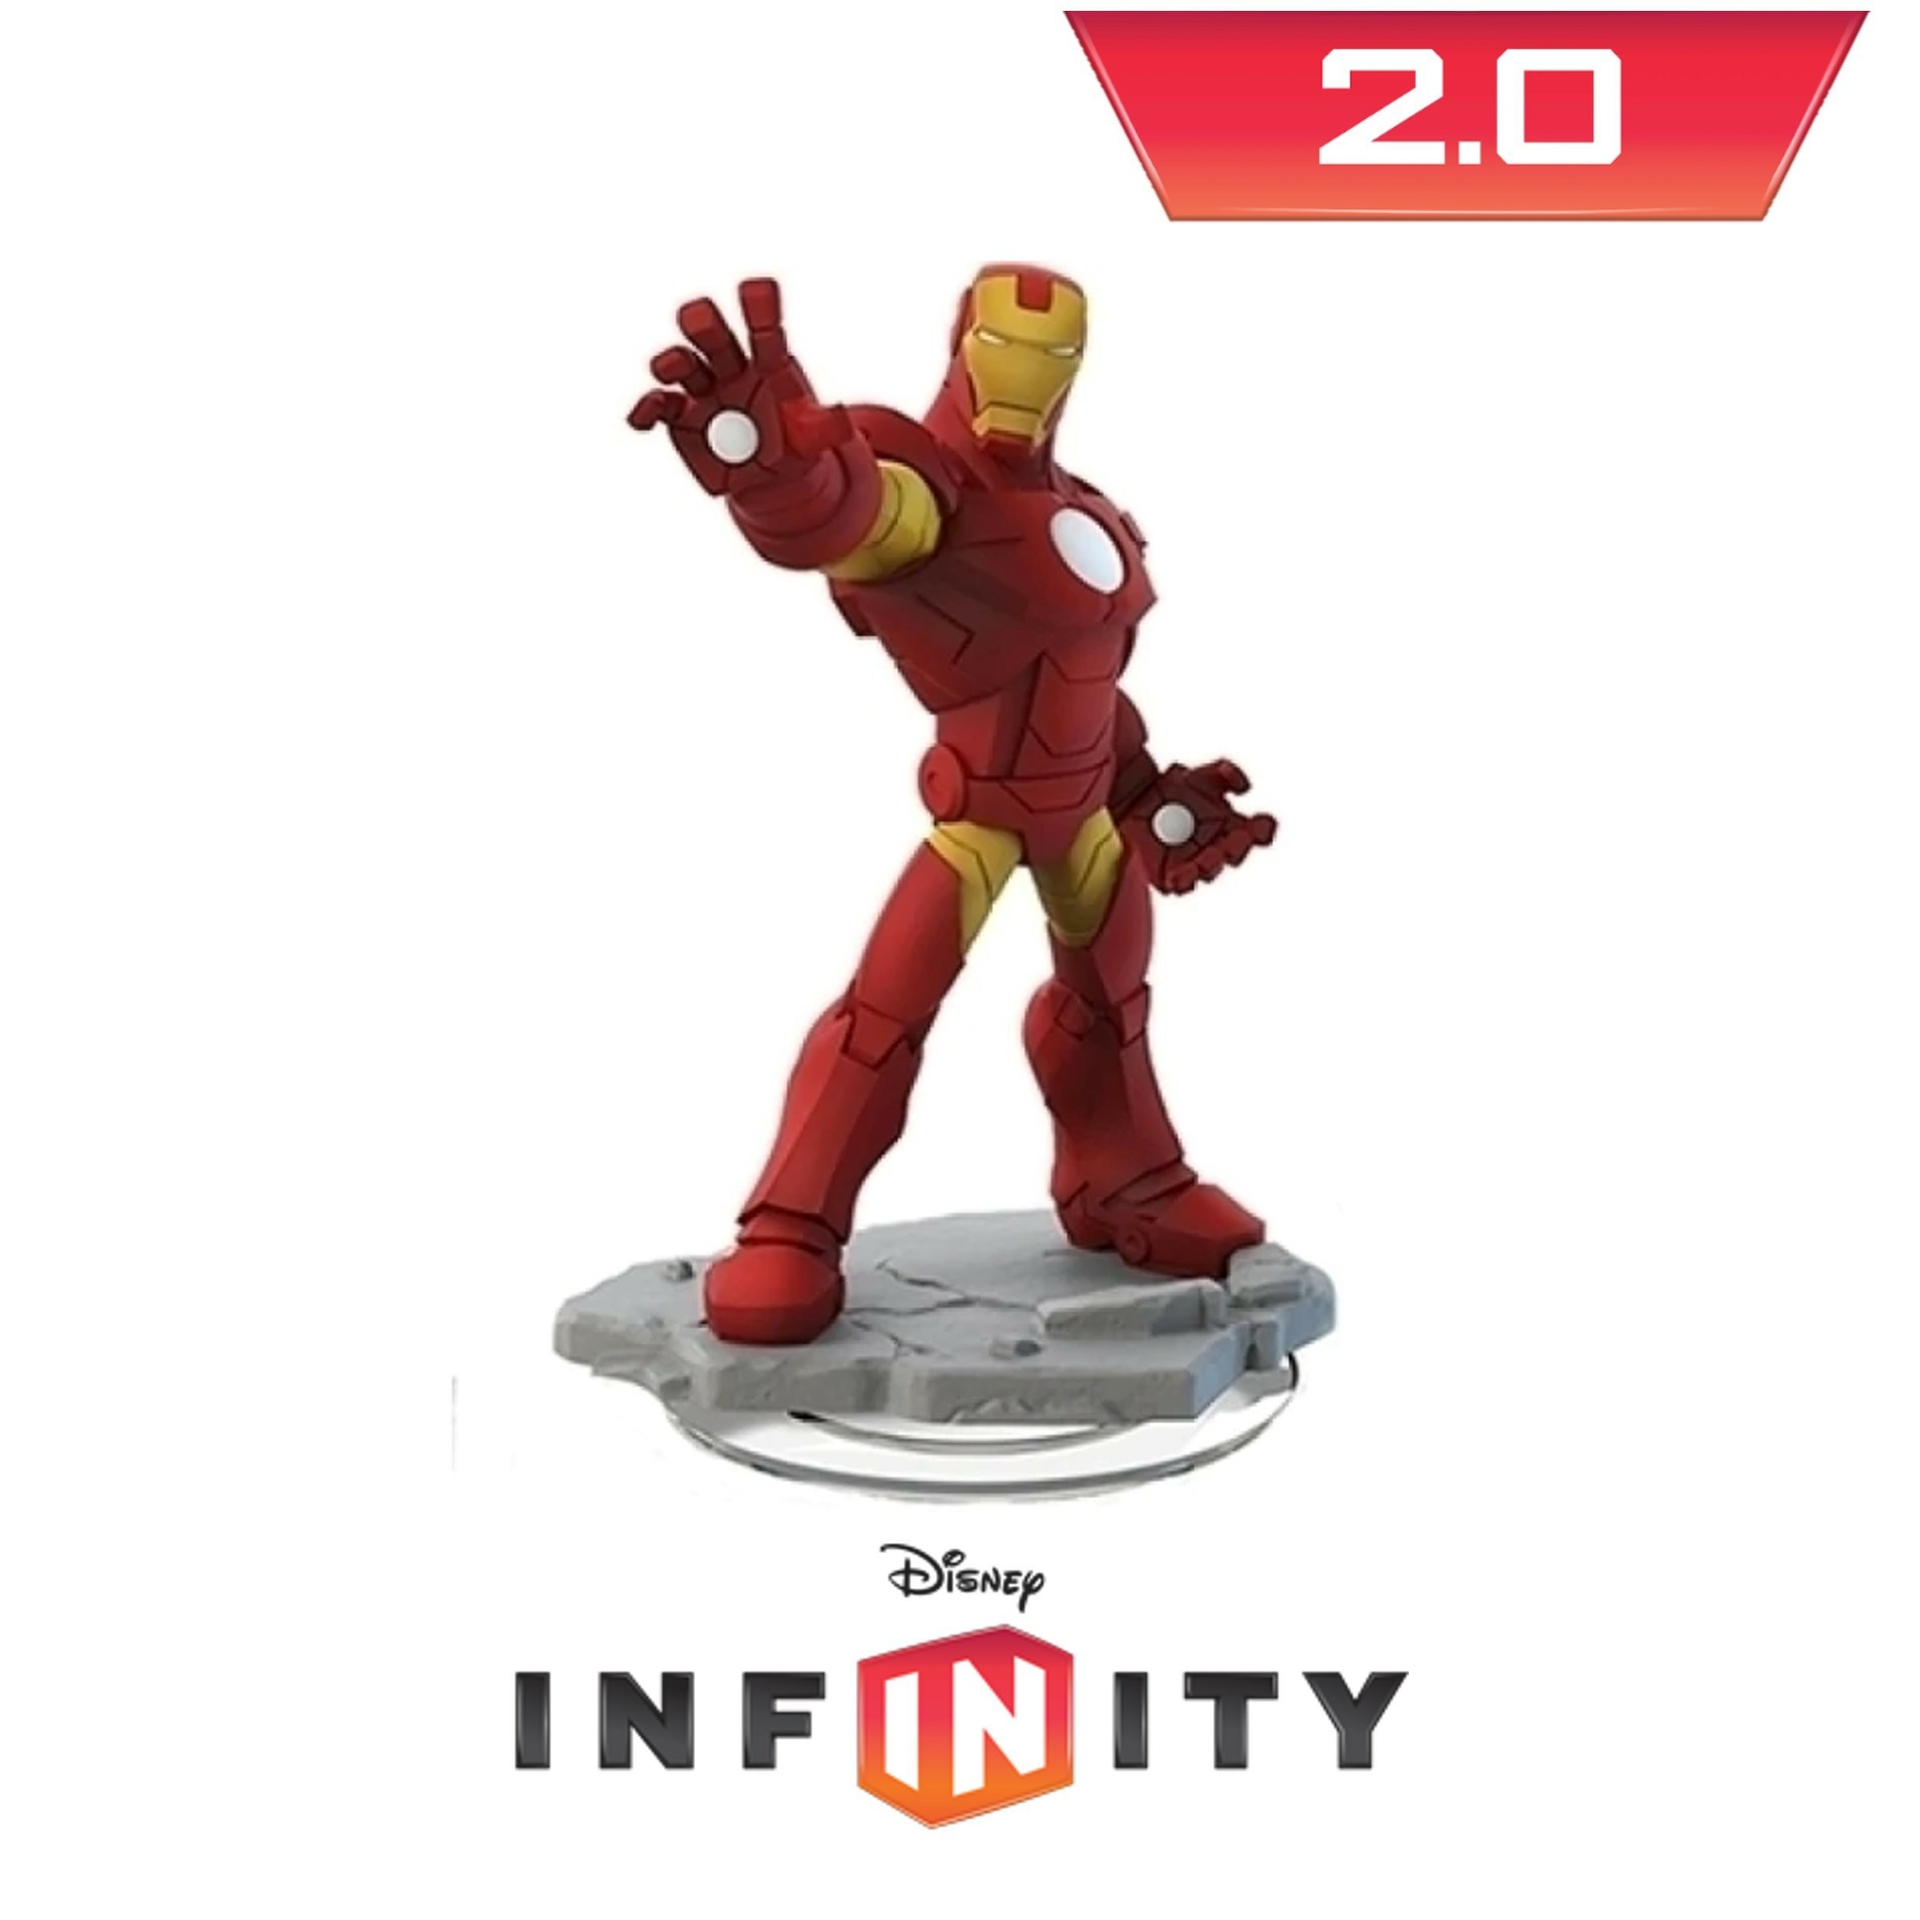 Disney Infinity - Iron man - Wii Hardware